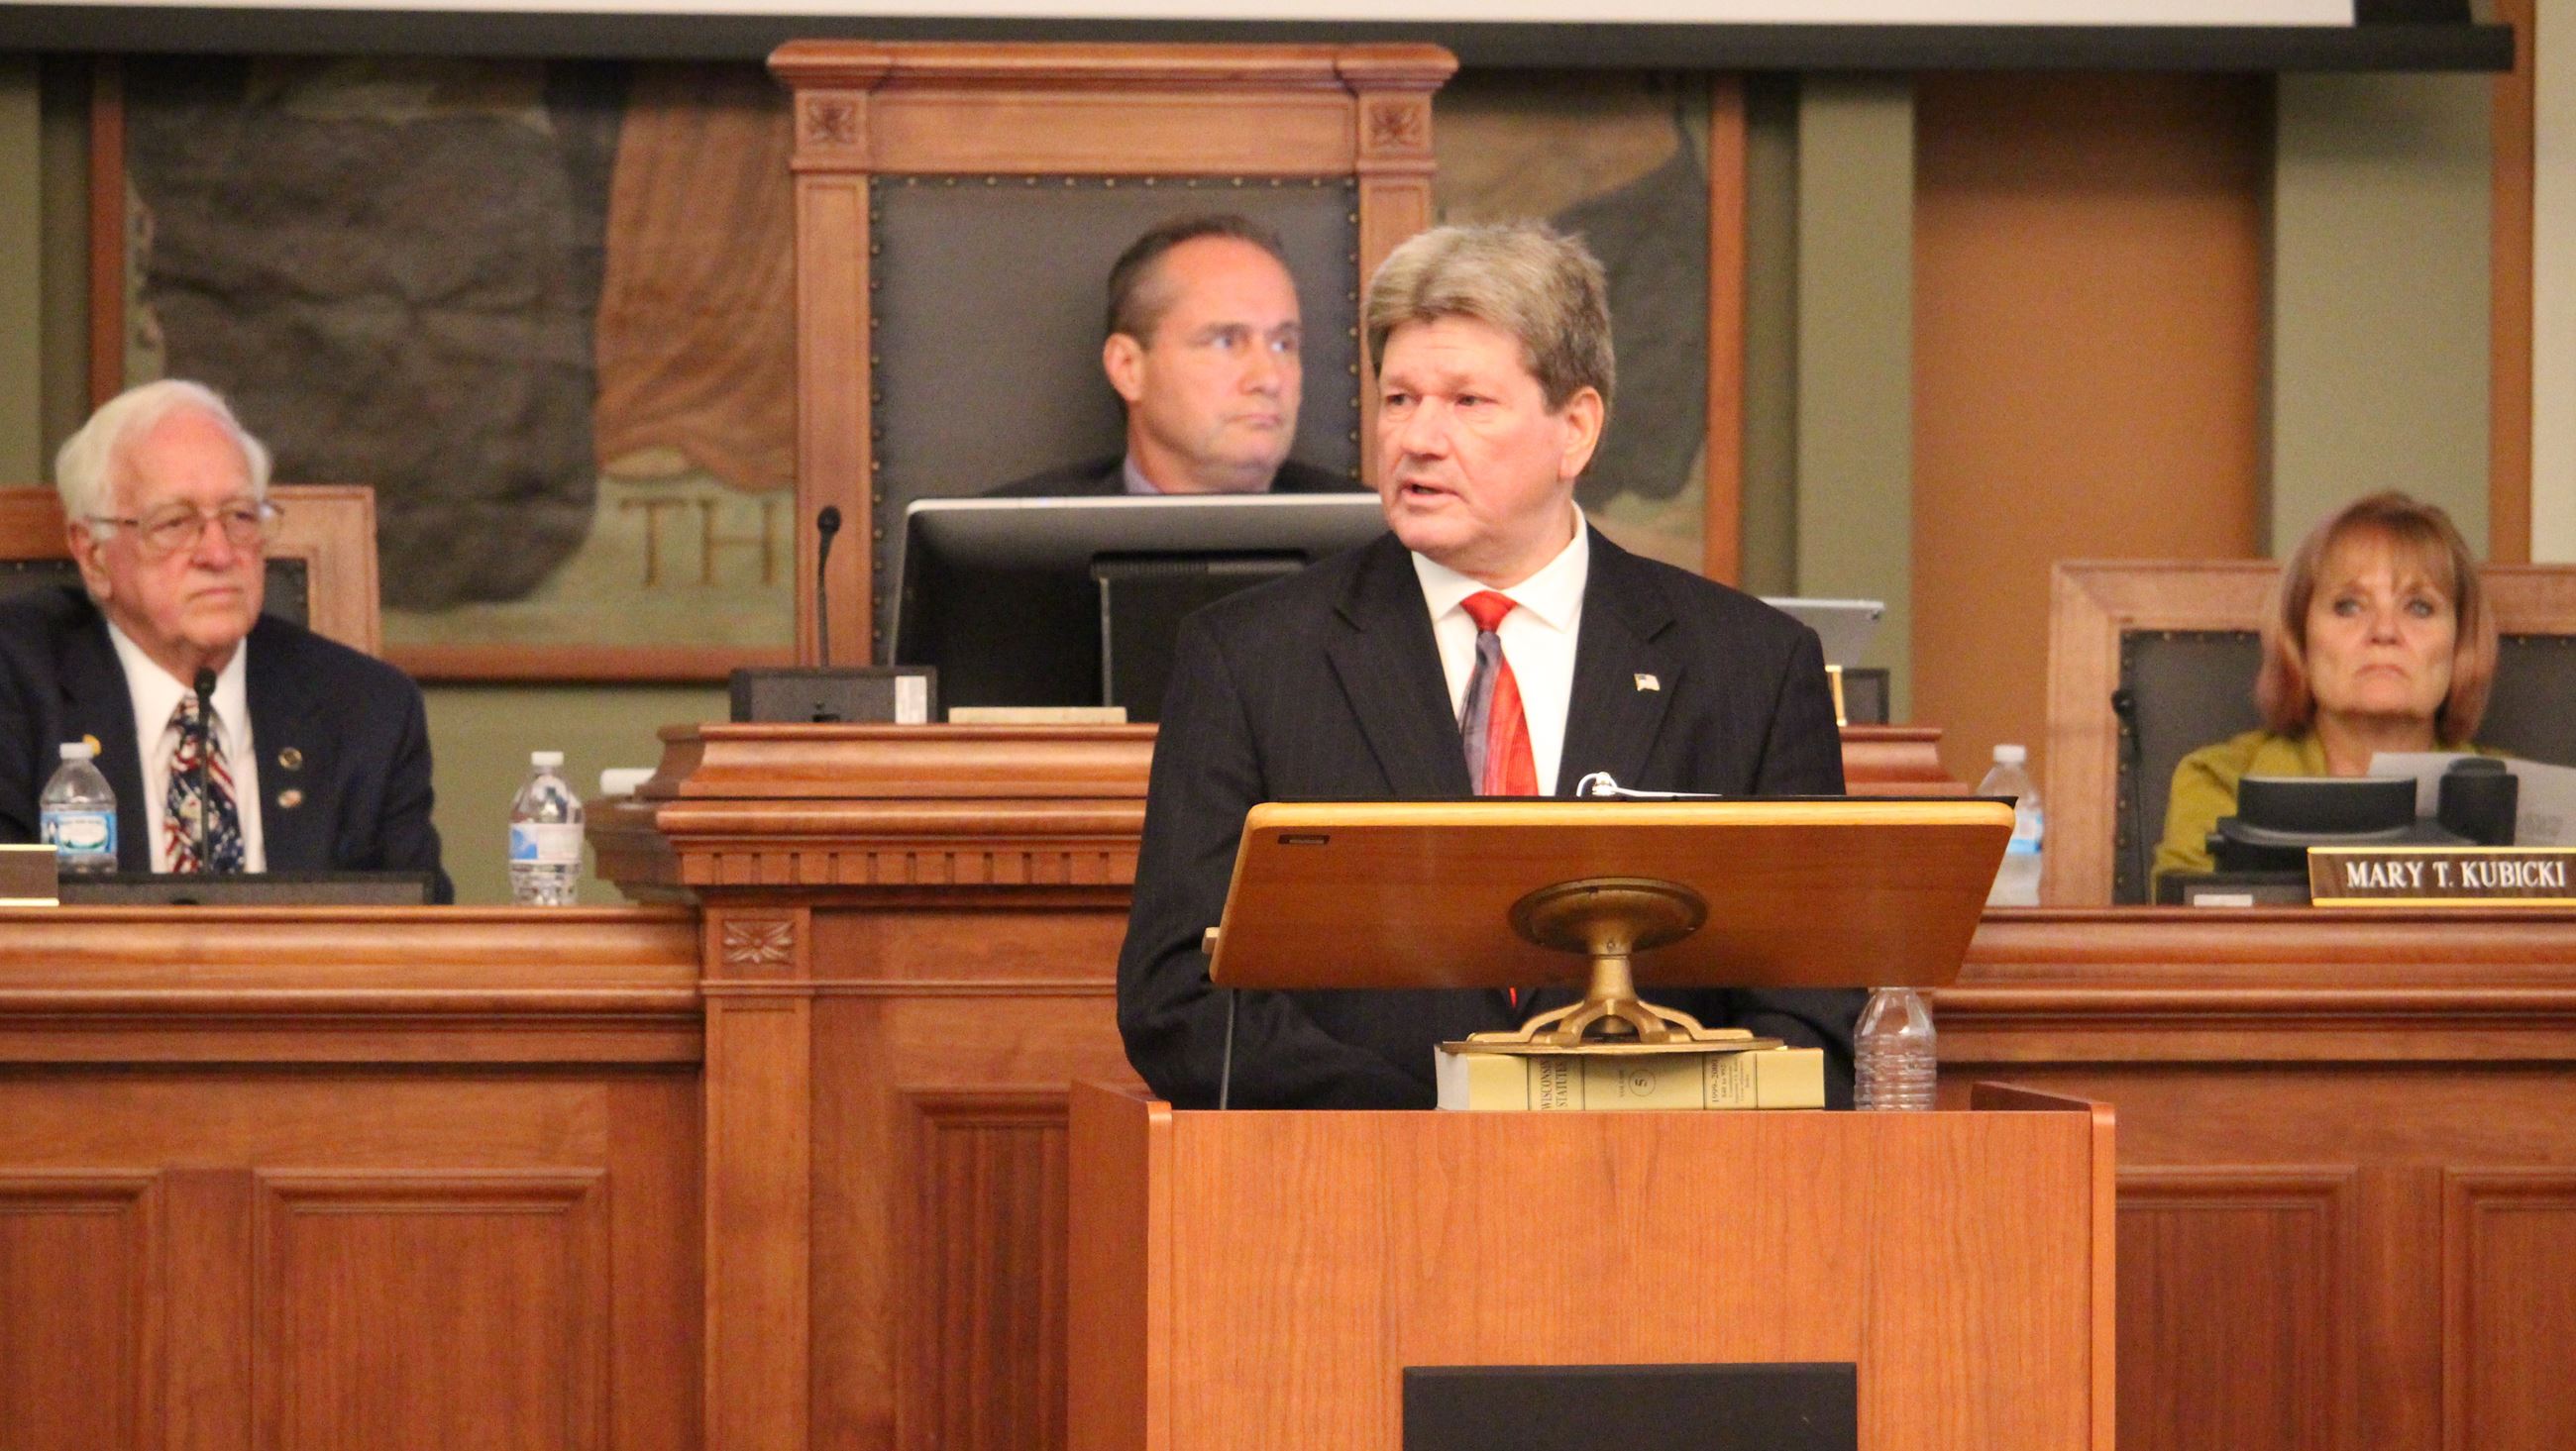 County Executive Jim Kreuser delivers his 2020 budget address